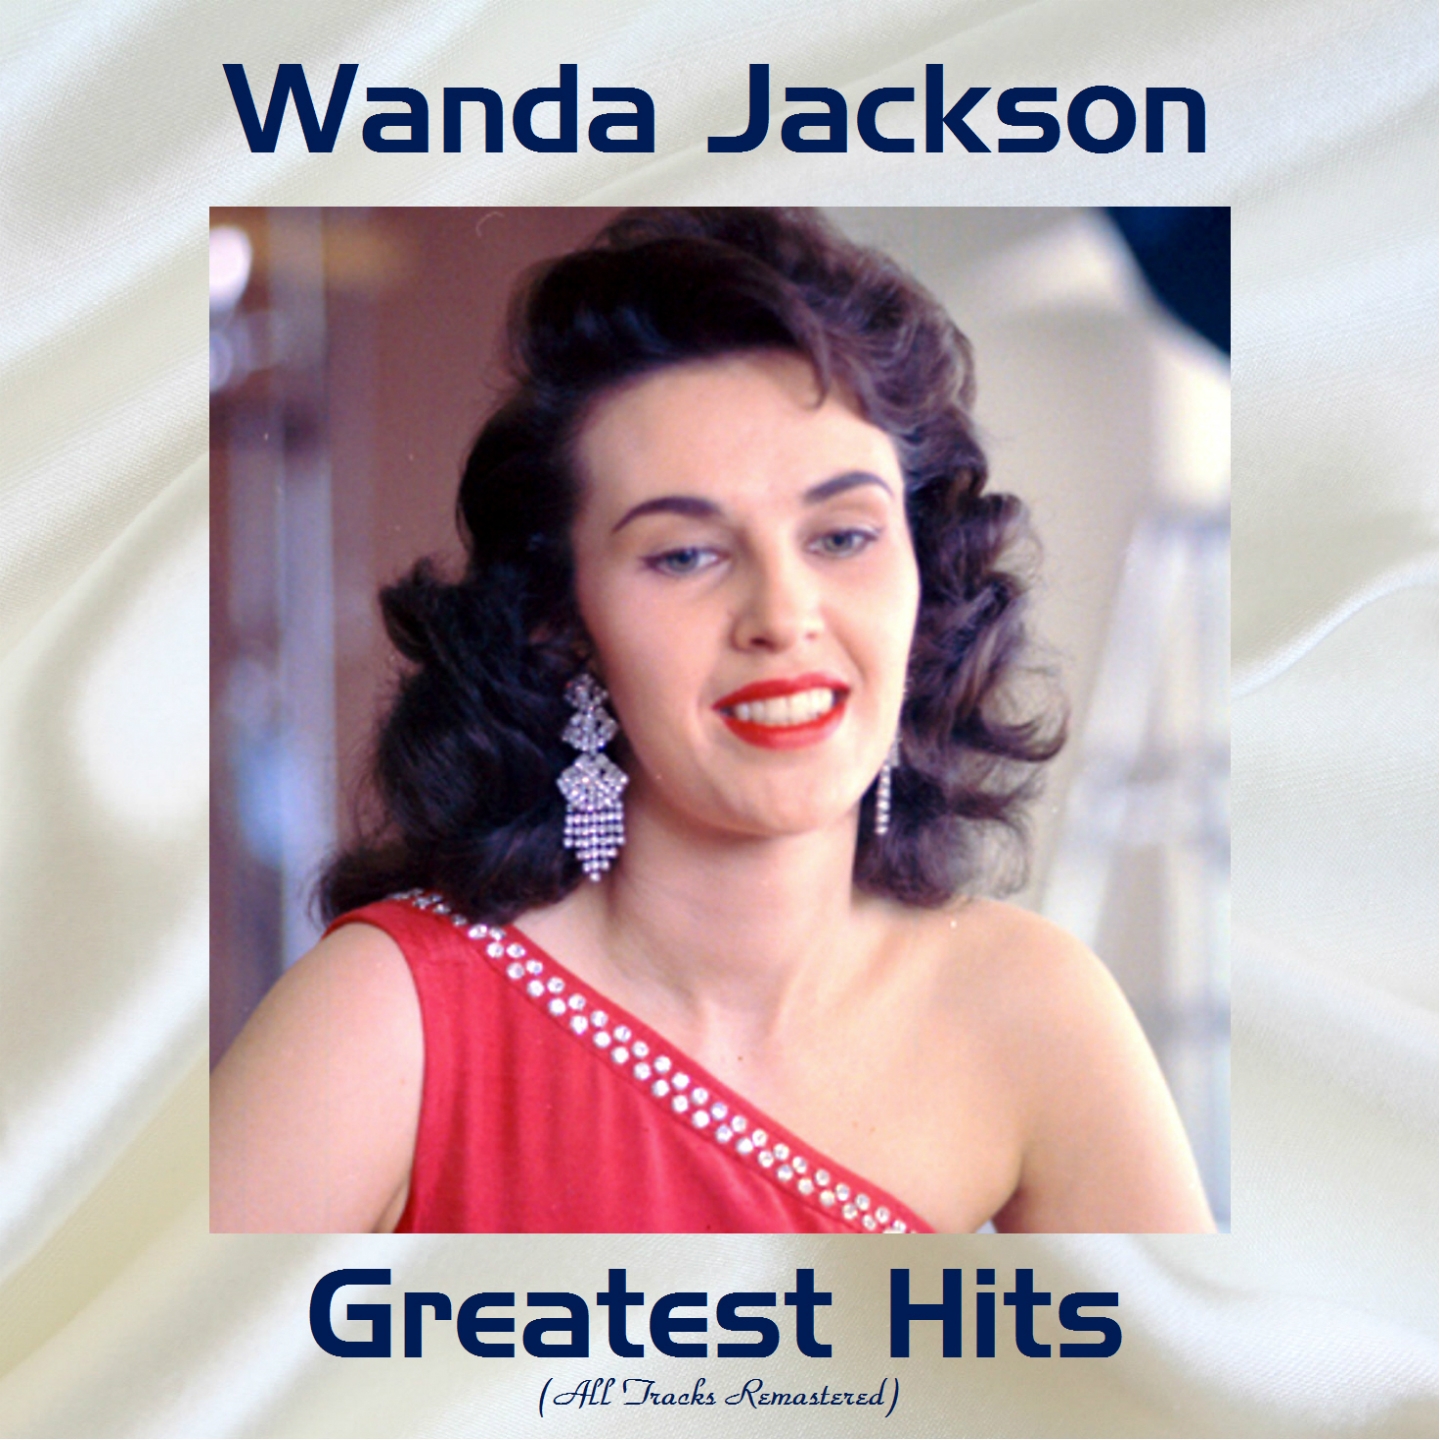 Wanda Jackson Greatest Hits (All Tracks Remastered)